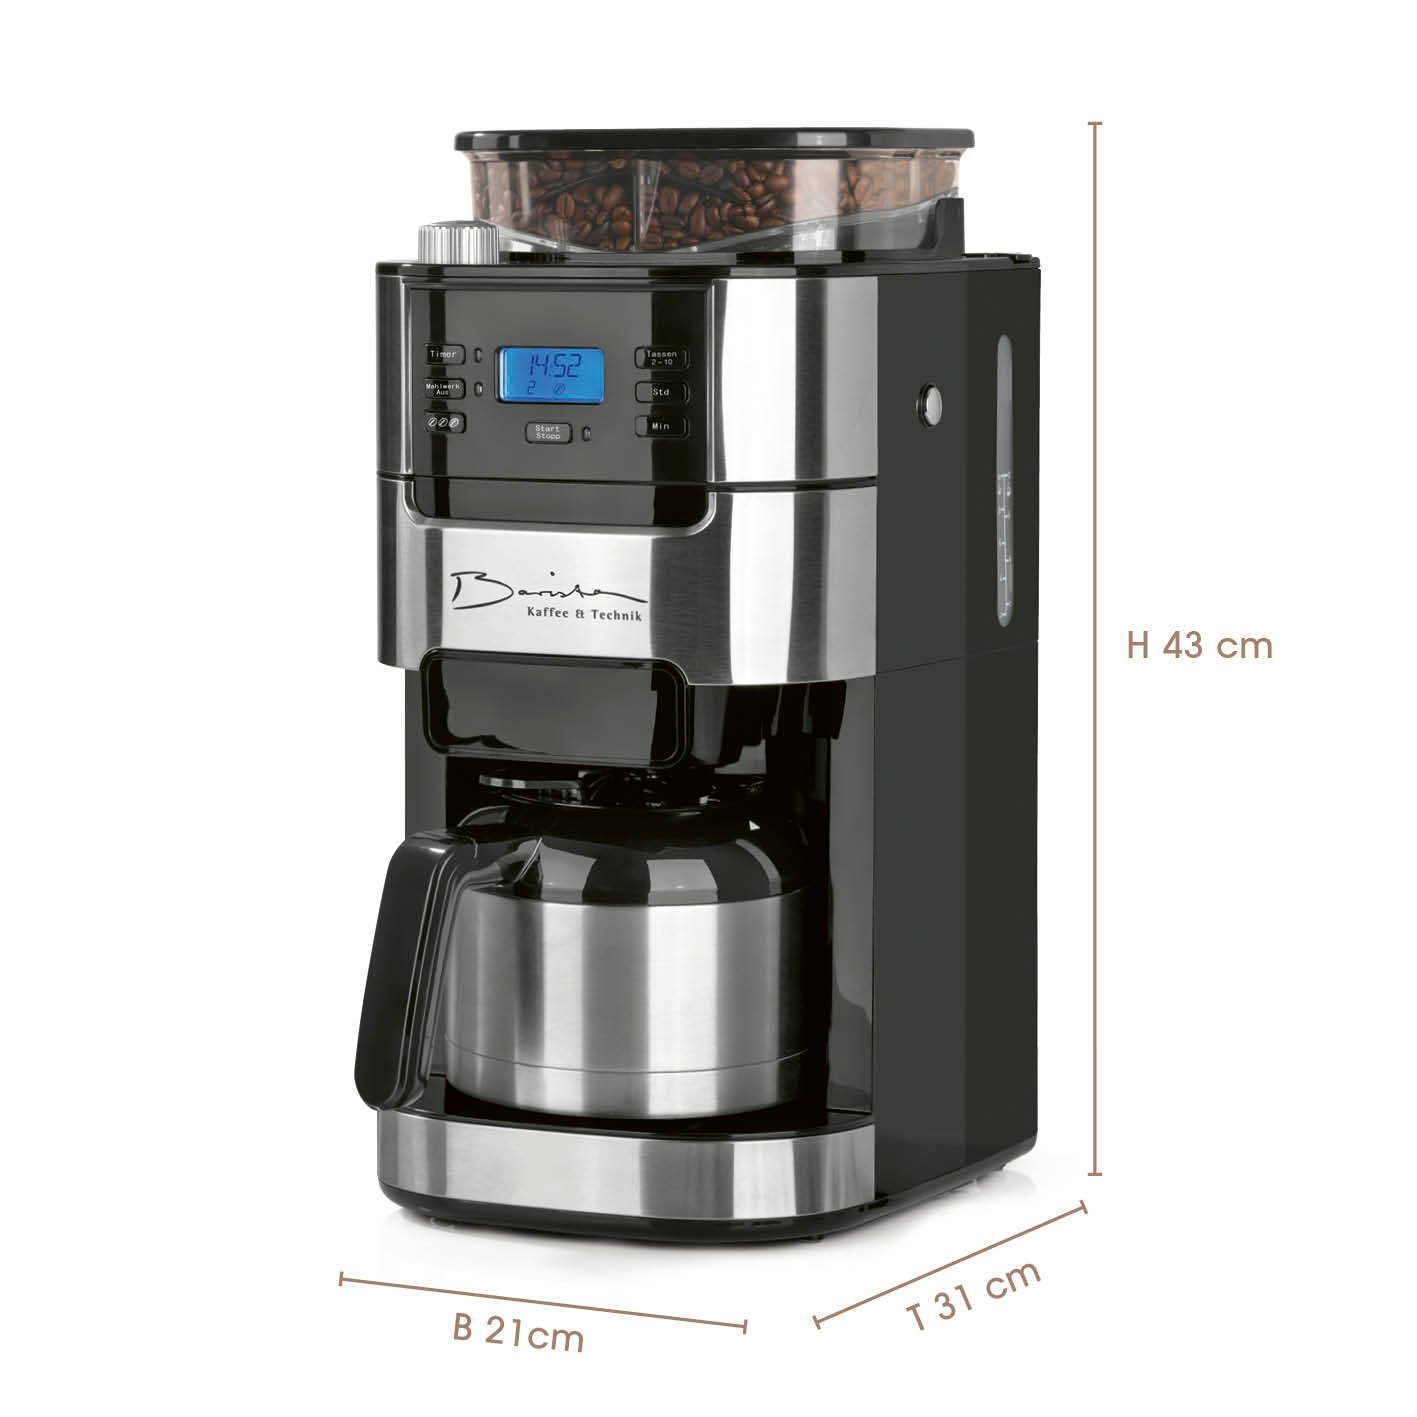 inkl. Mahlwerk Kaffeemaschine Barista Kaffeekanne, Filterkaffeemaschine, mit 1l Isolierkanne